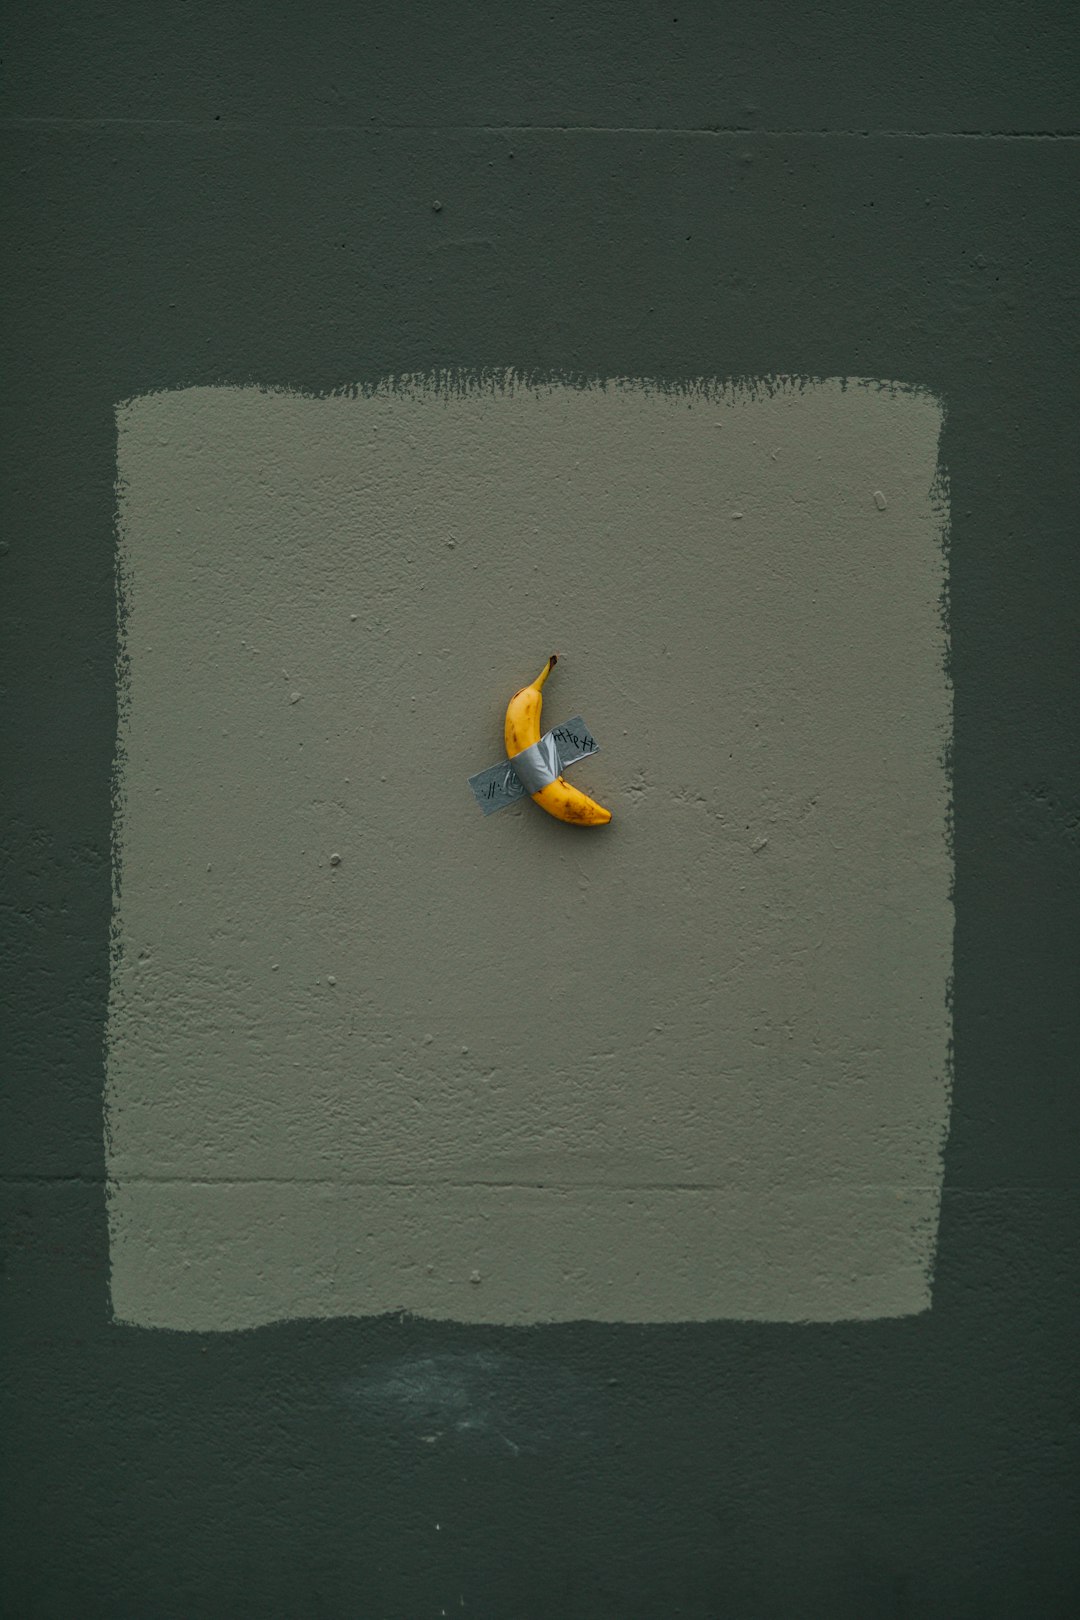 yellow banana fruit with tape